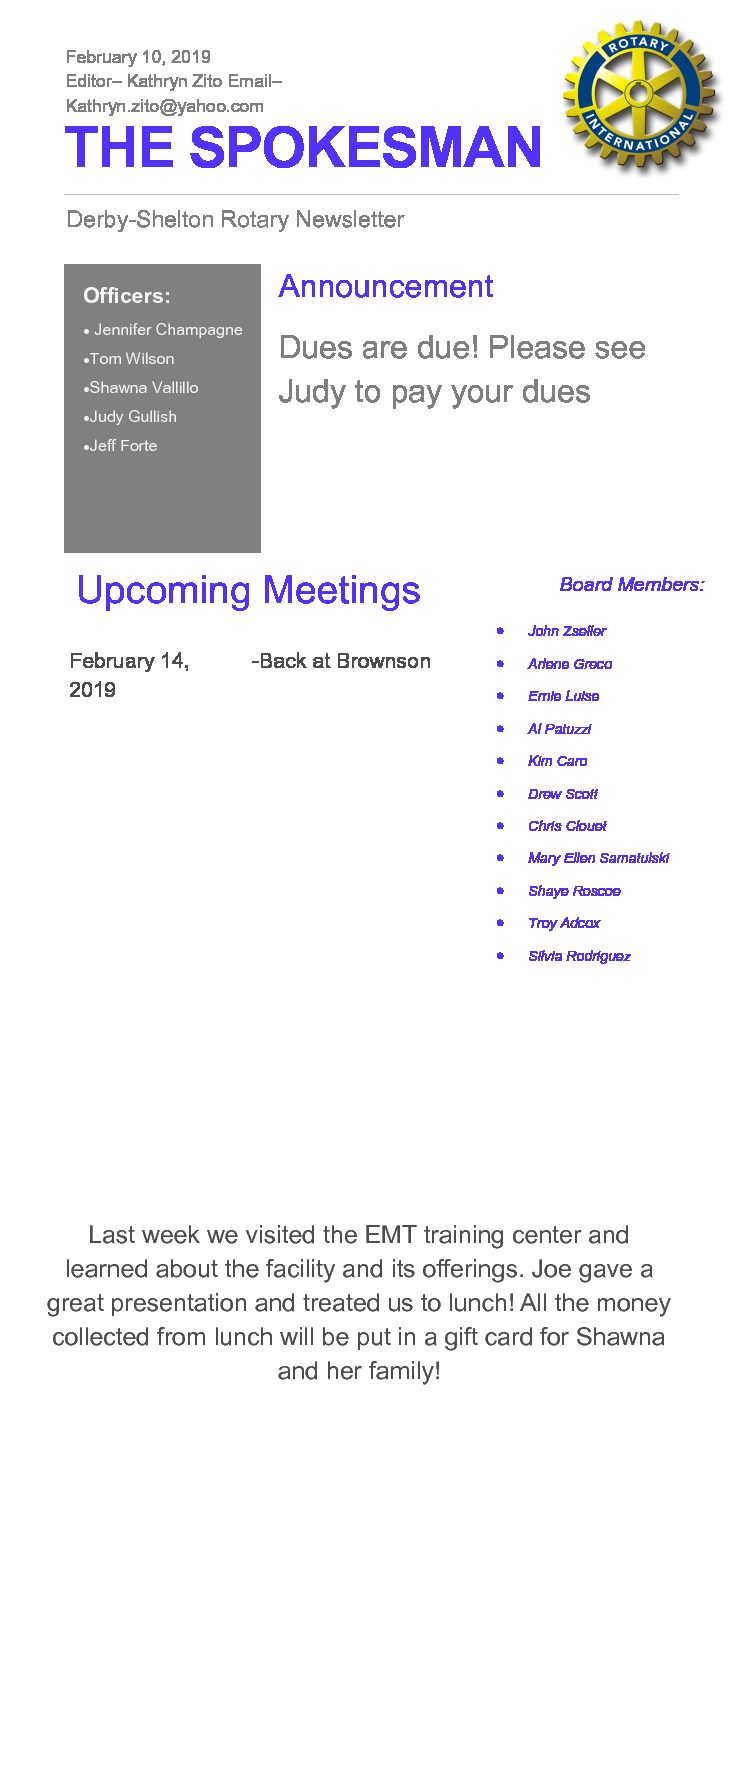 Weekly Meeting - still virtual